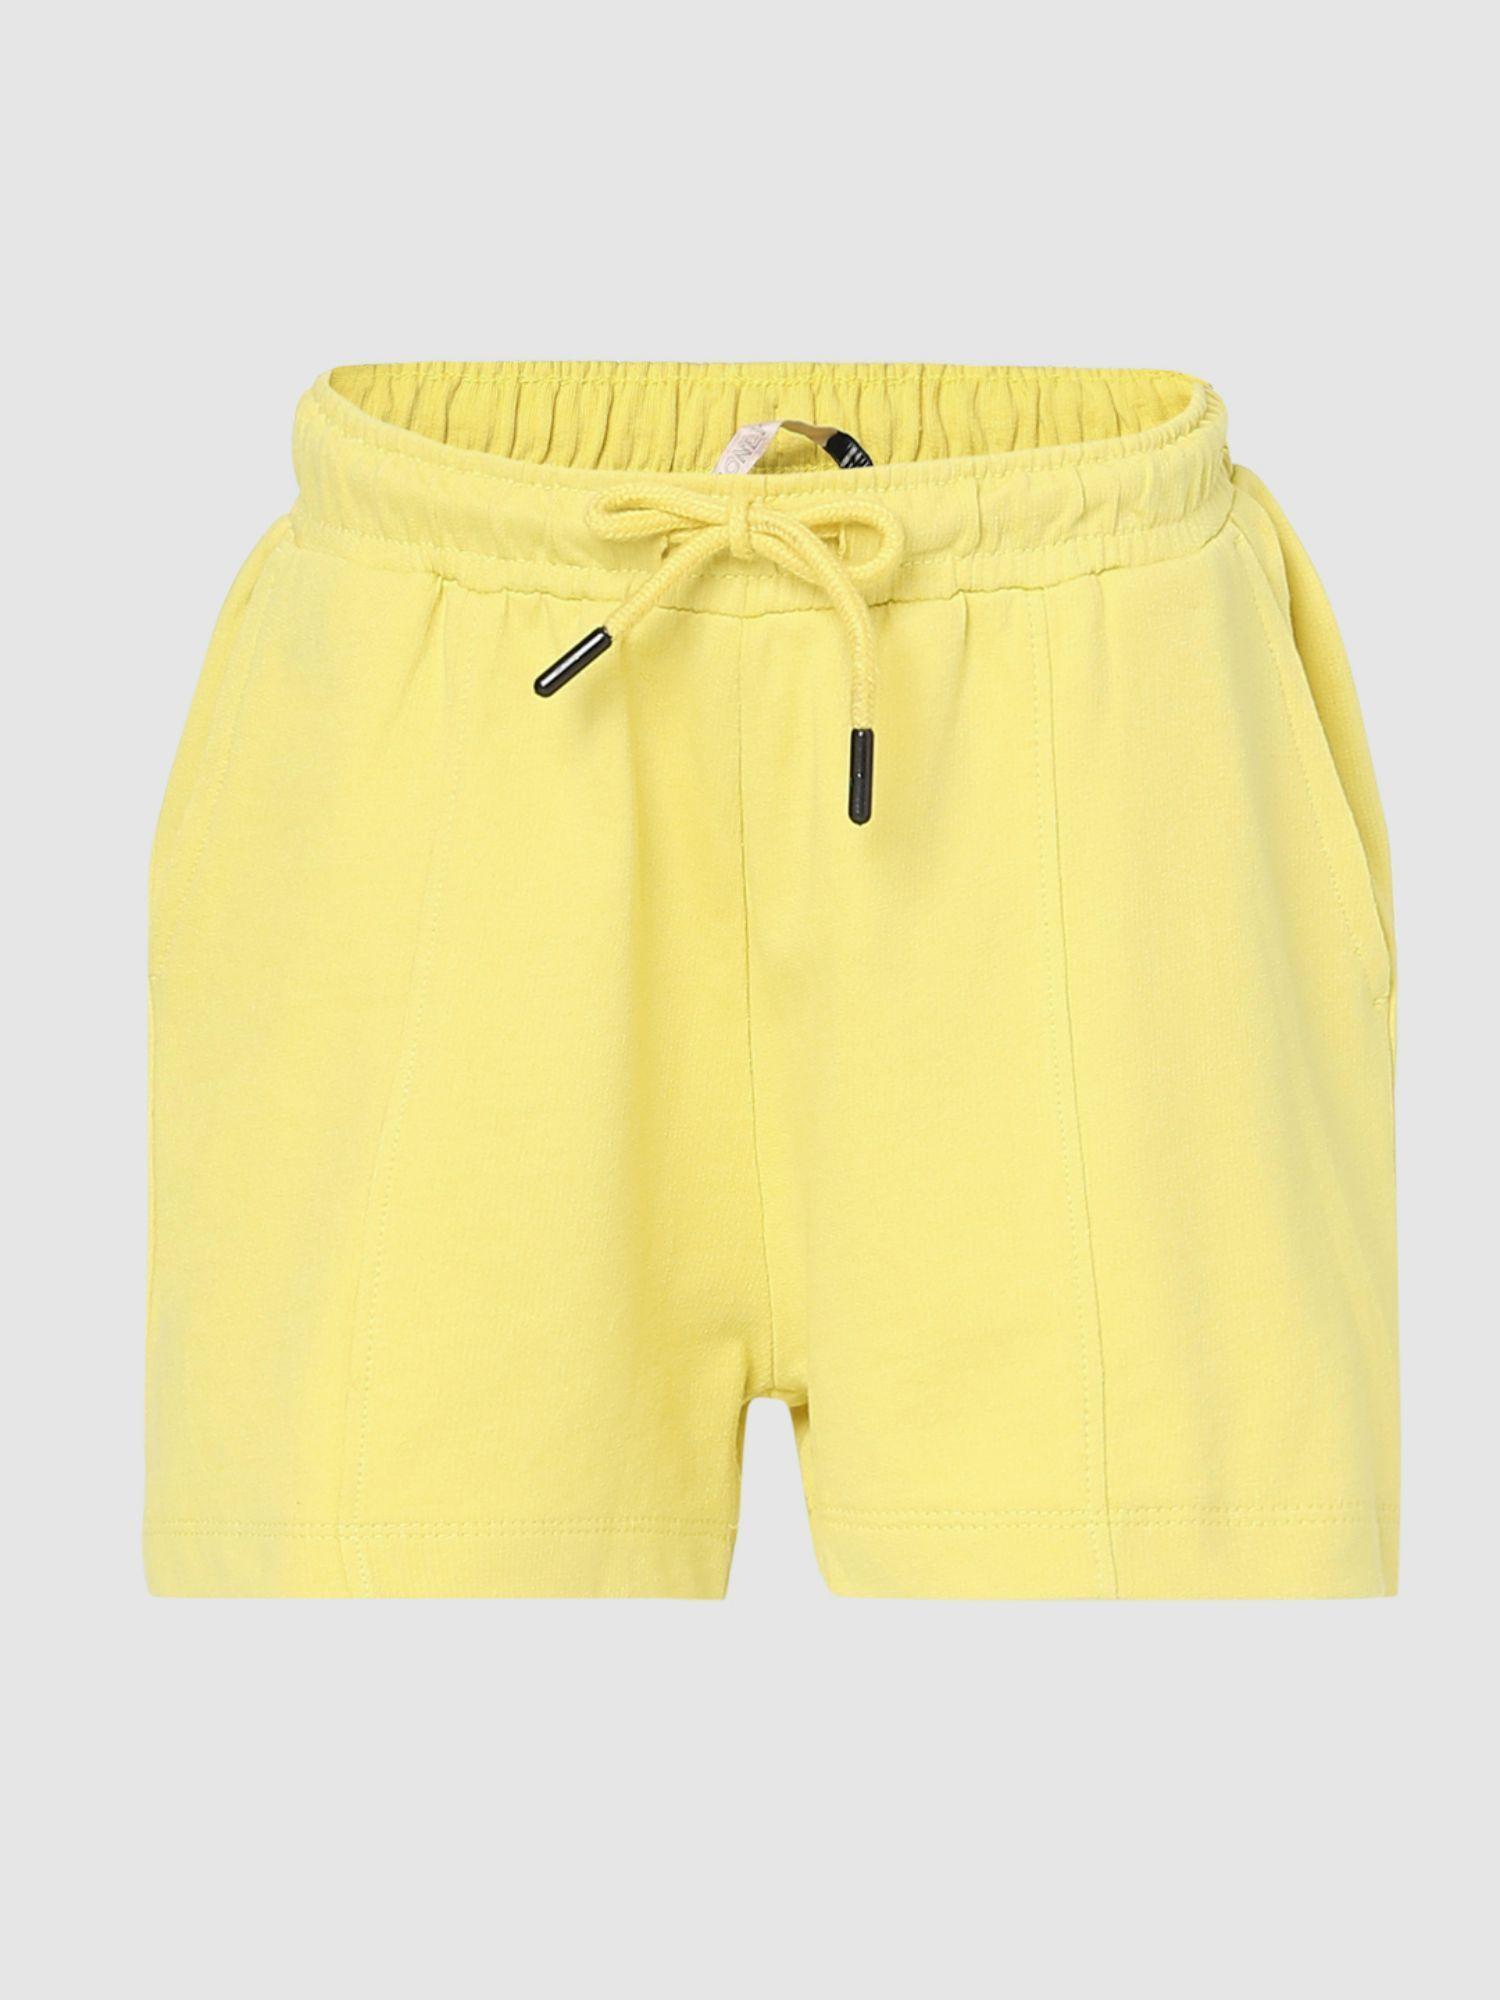 girls-solid-yellow-shorts